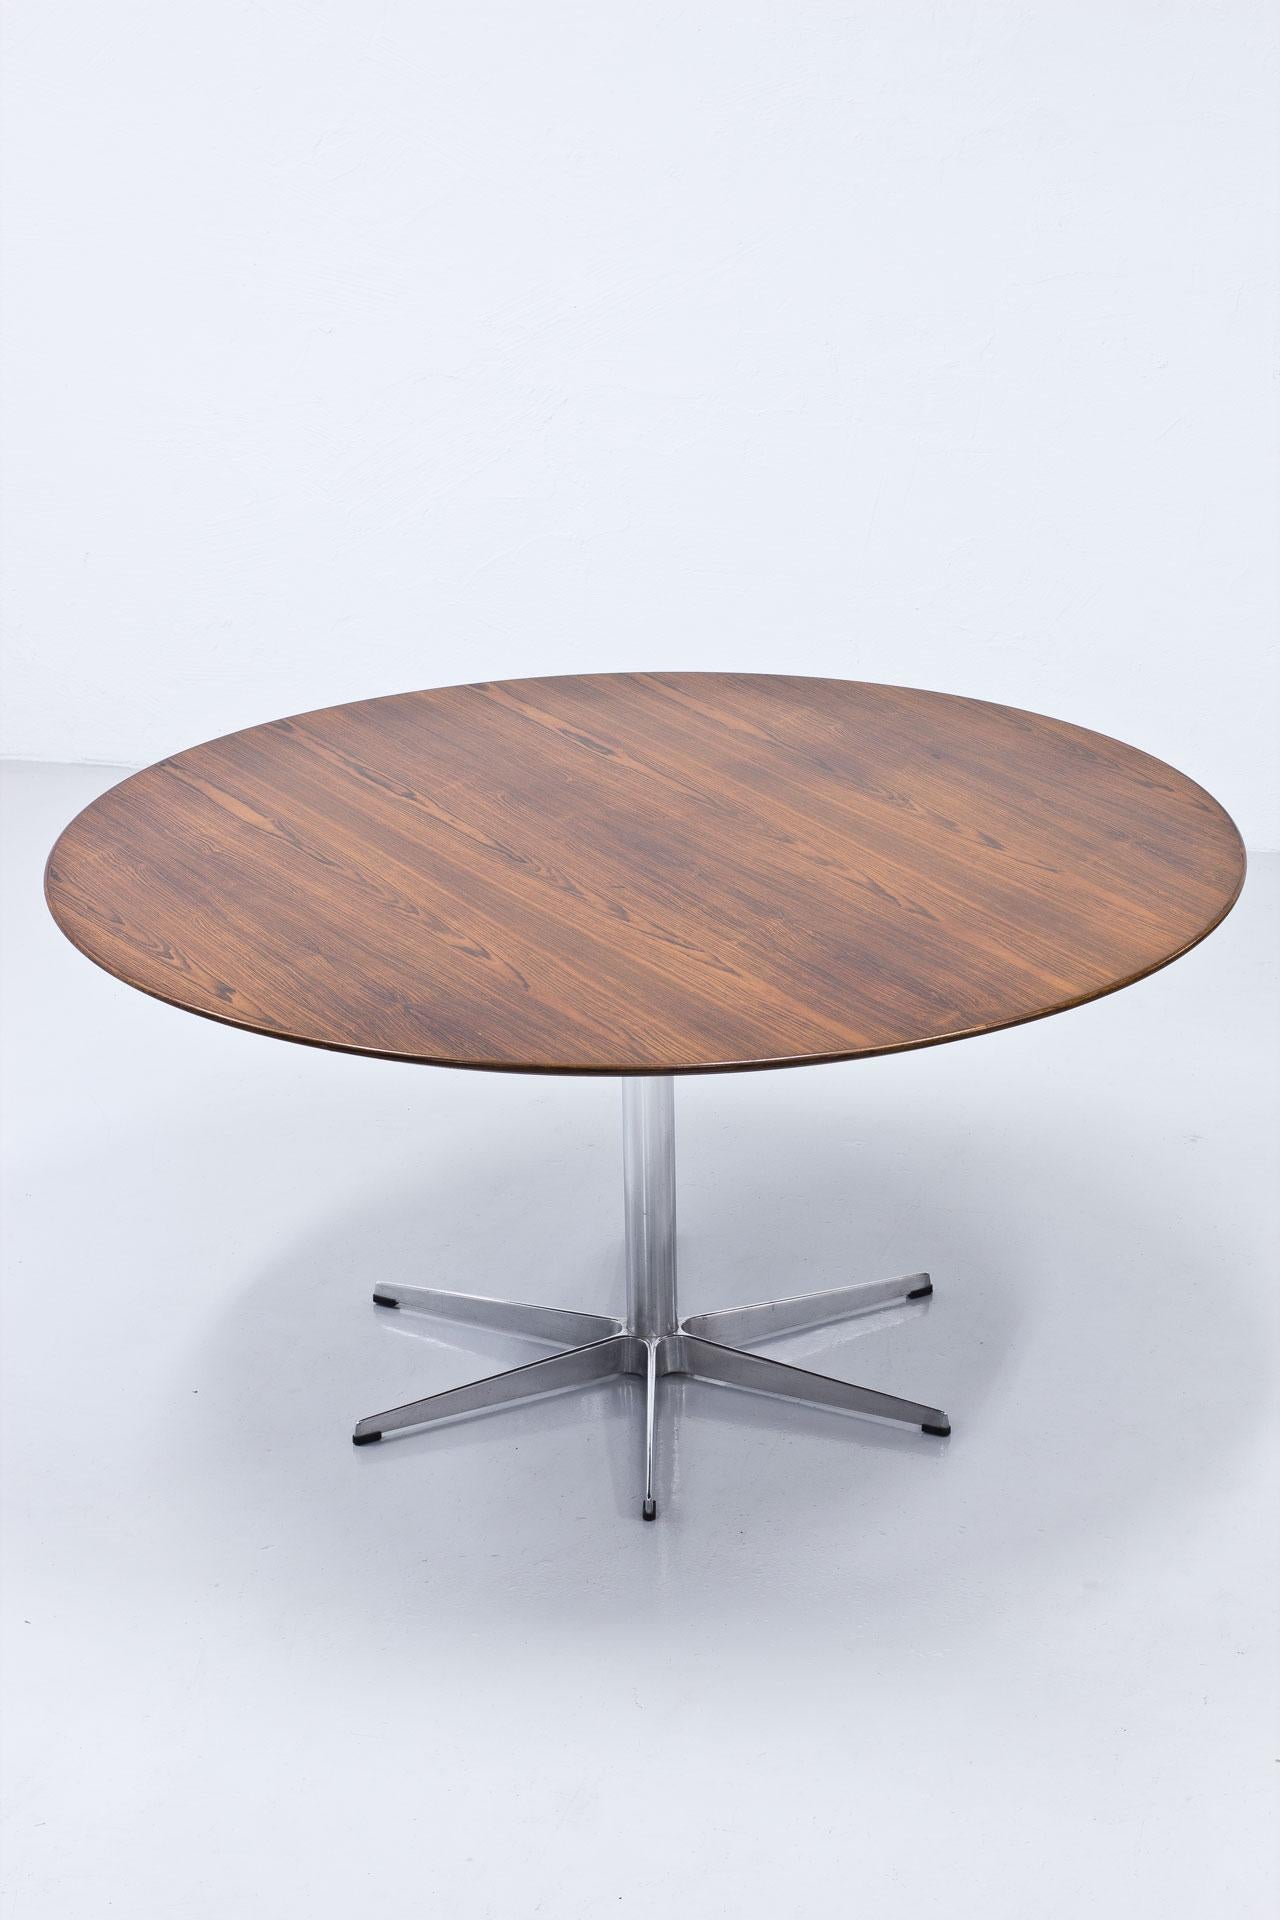 Scandinavian Modern Arne Jacobsen Rosewood Dining Table